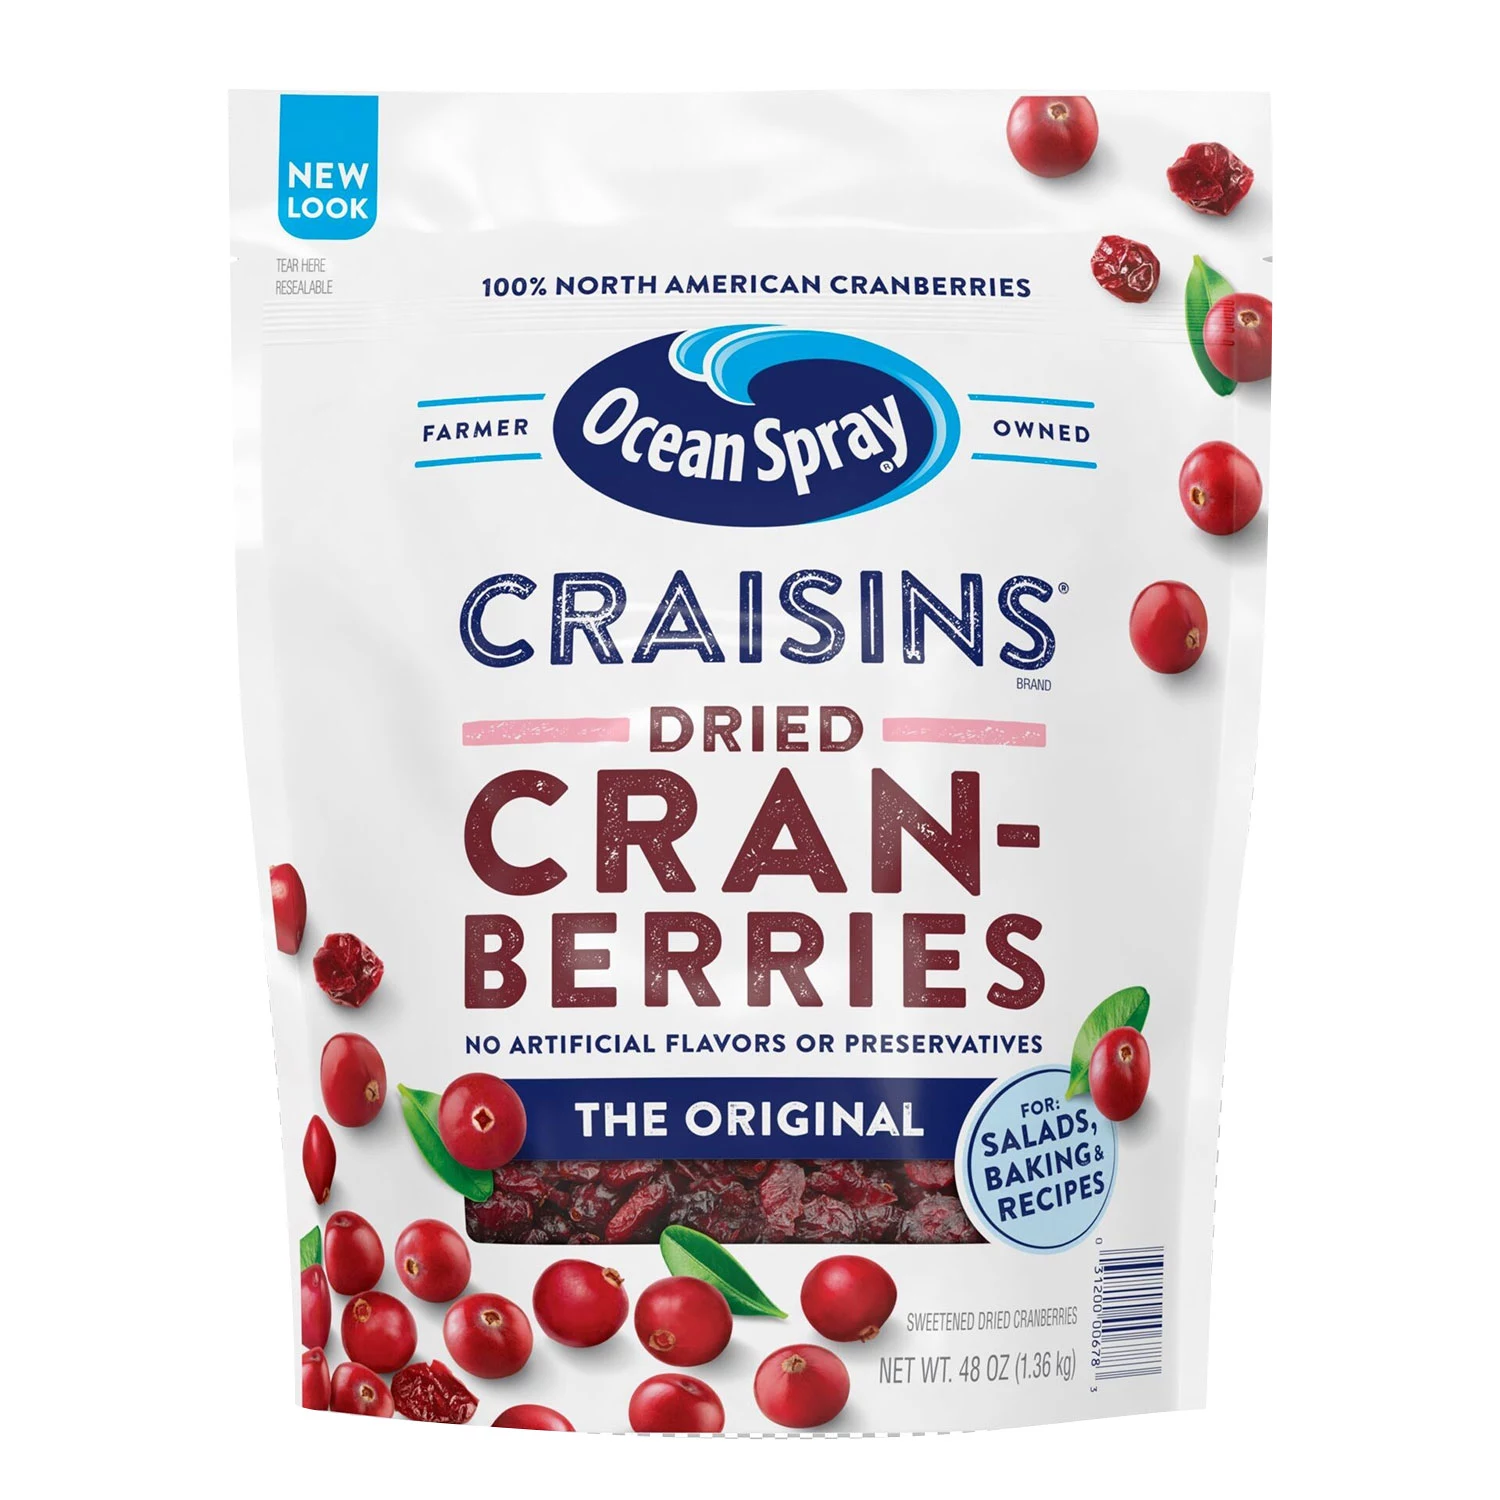 Ocean Spray Craisins Dried Cranberries Original